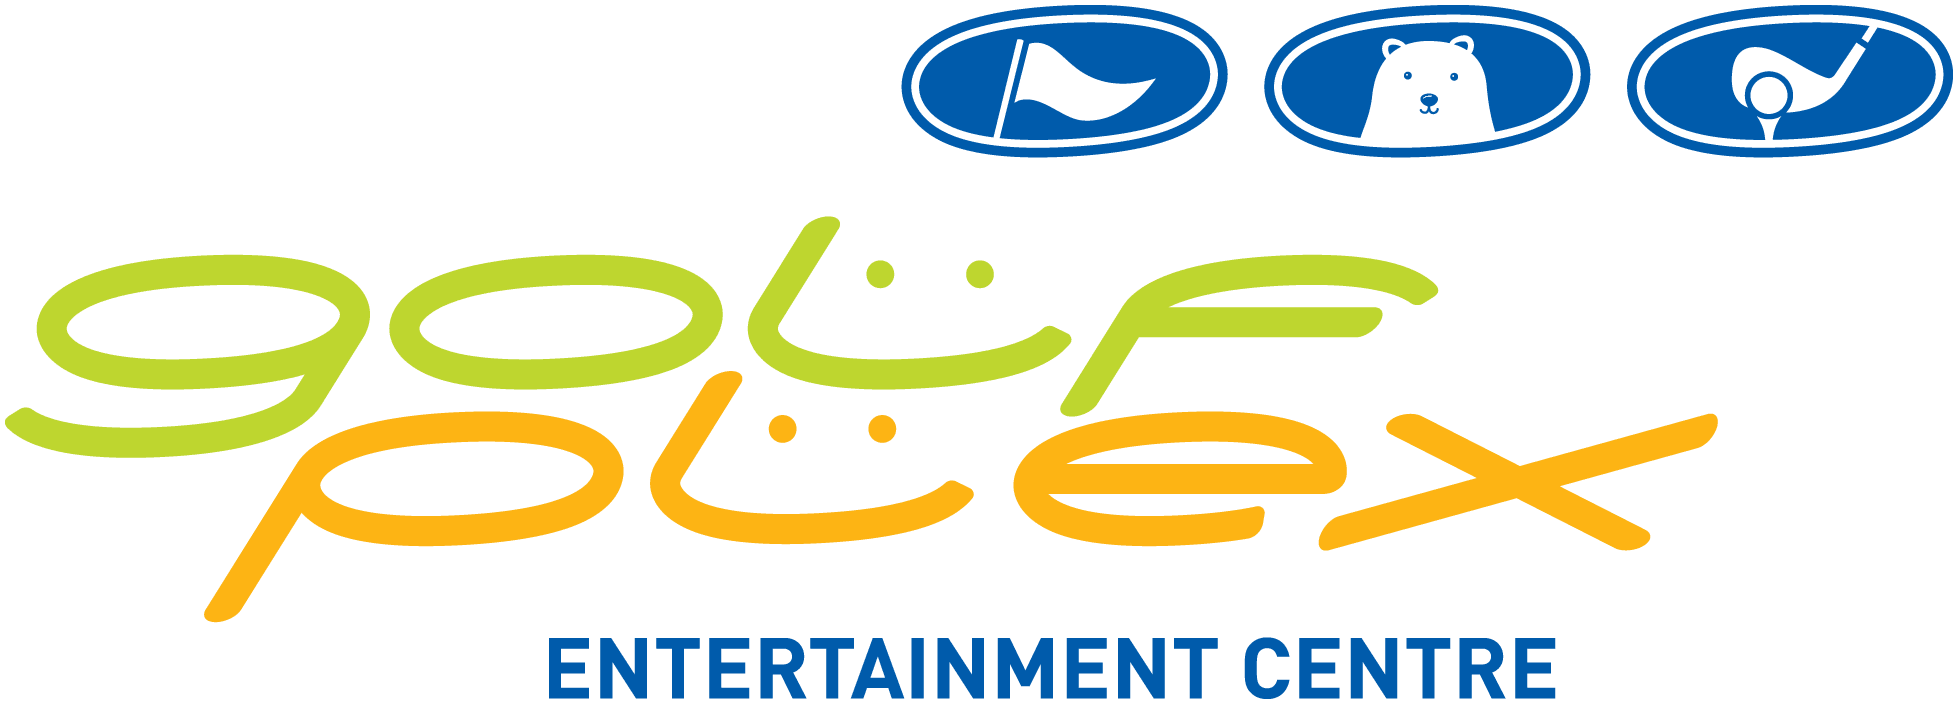 Golf Plex logo MASTER with sub-brands